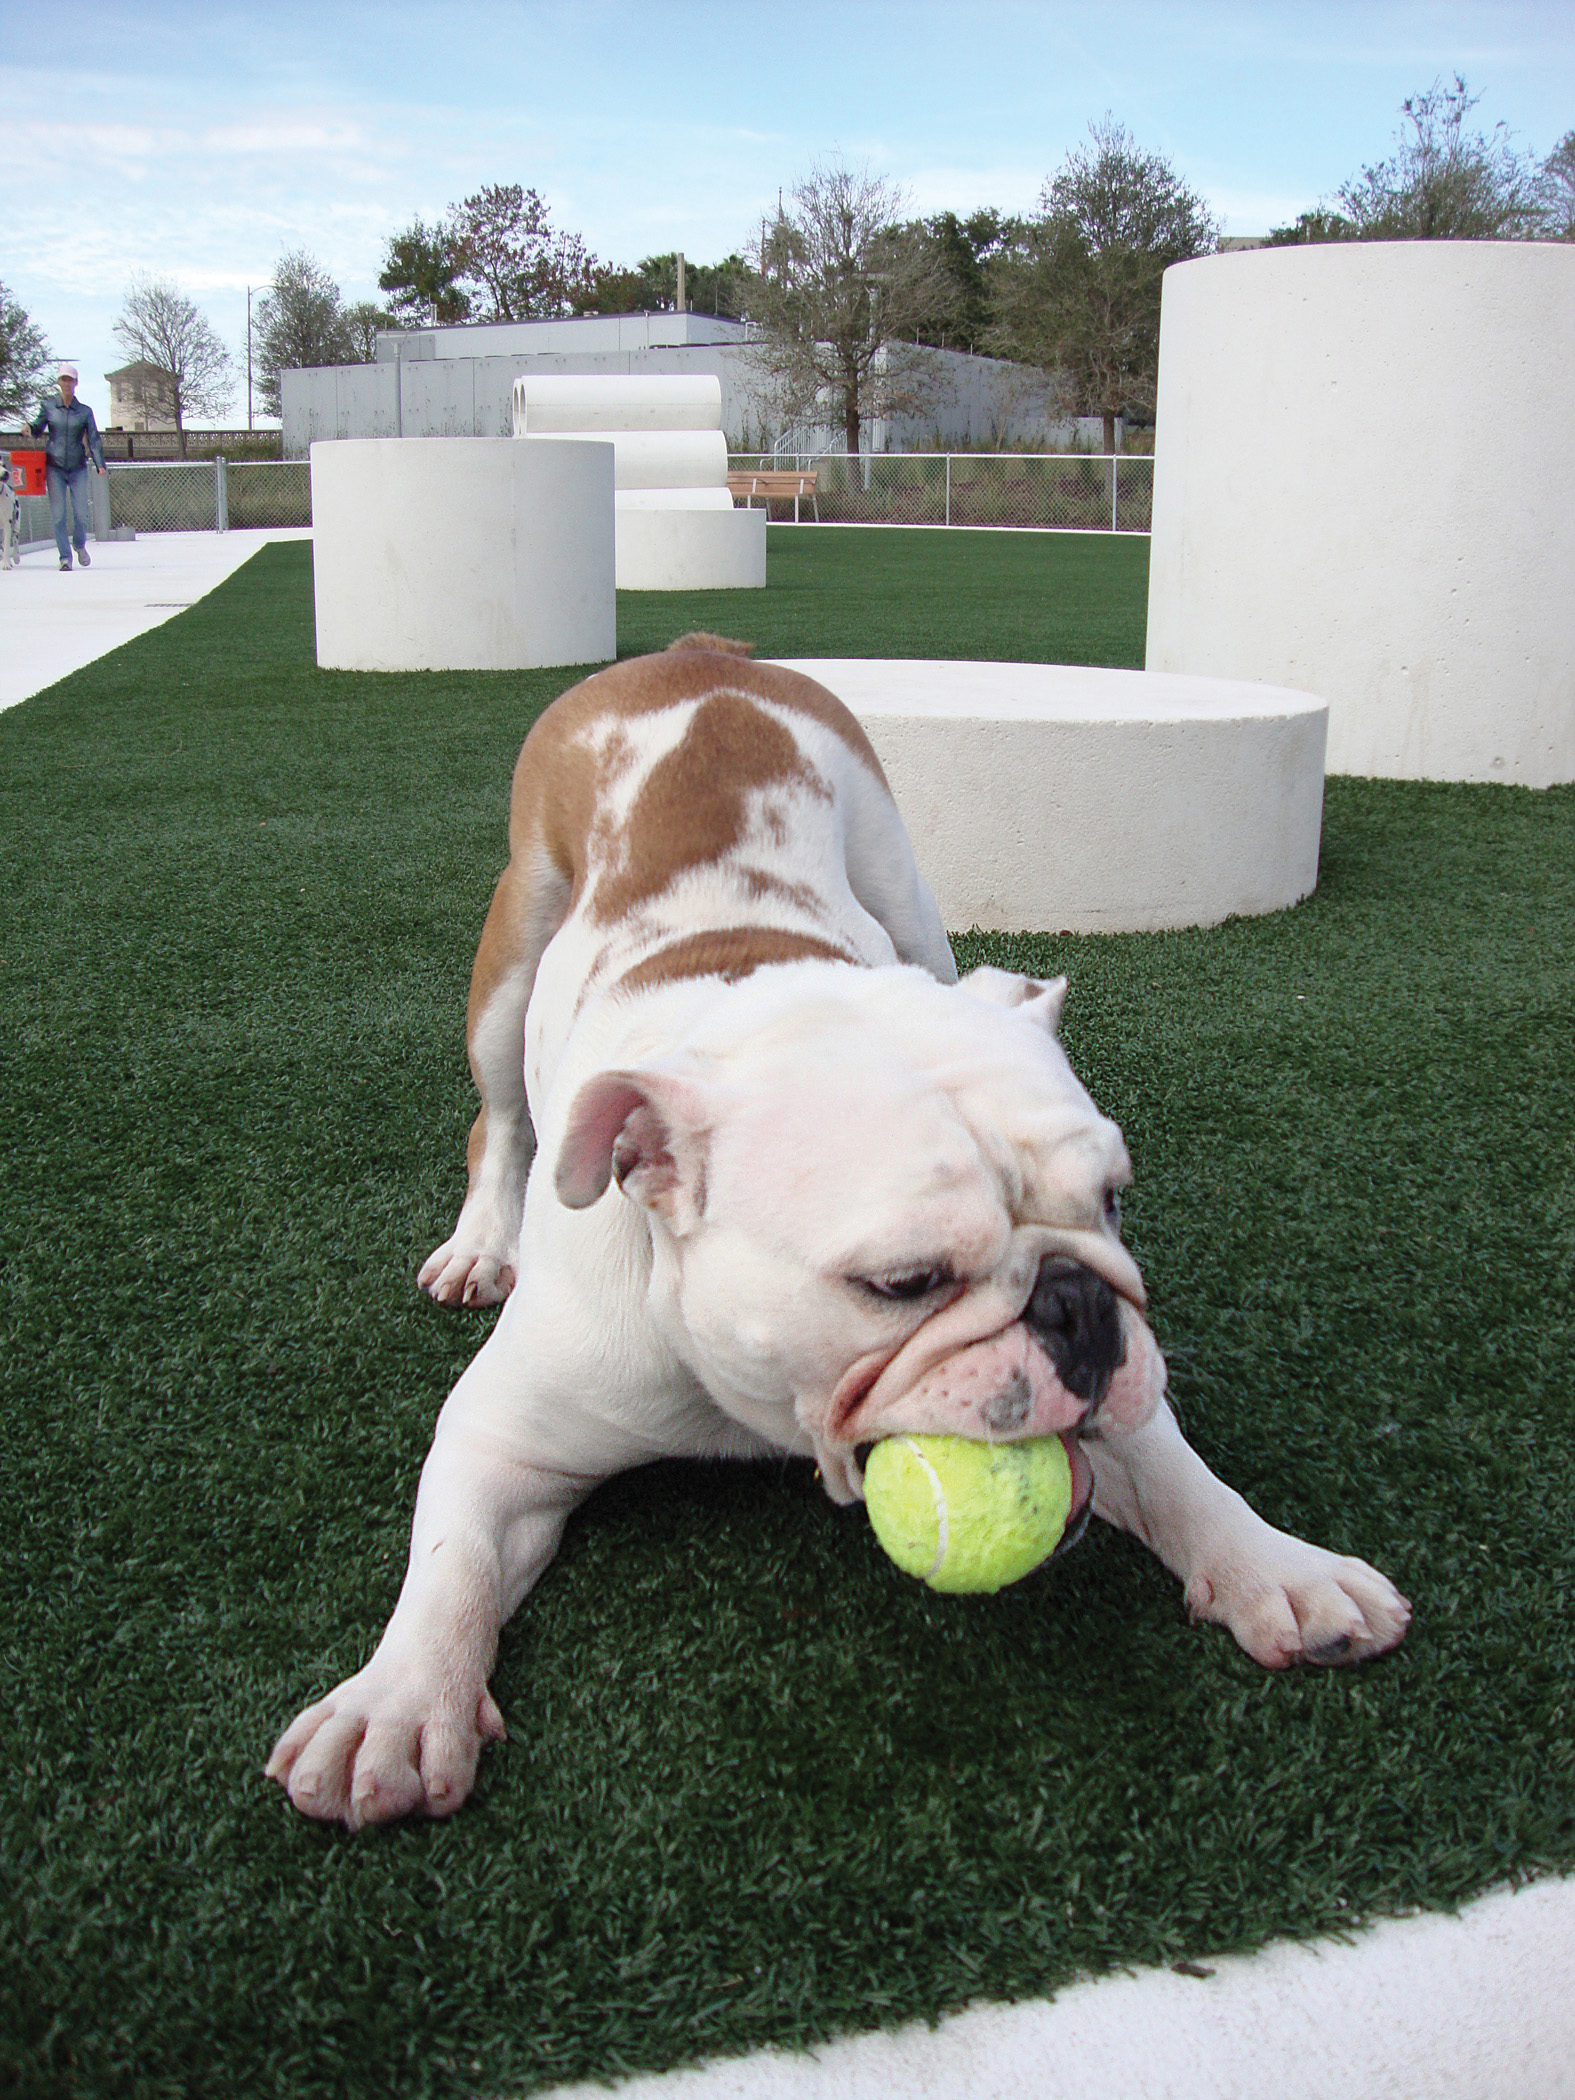 A bulldog enjoys K9Grass at the Curtis-Hixon dog park in Tampa, Fla.